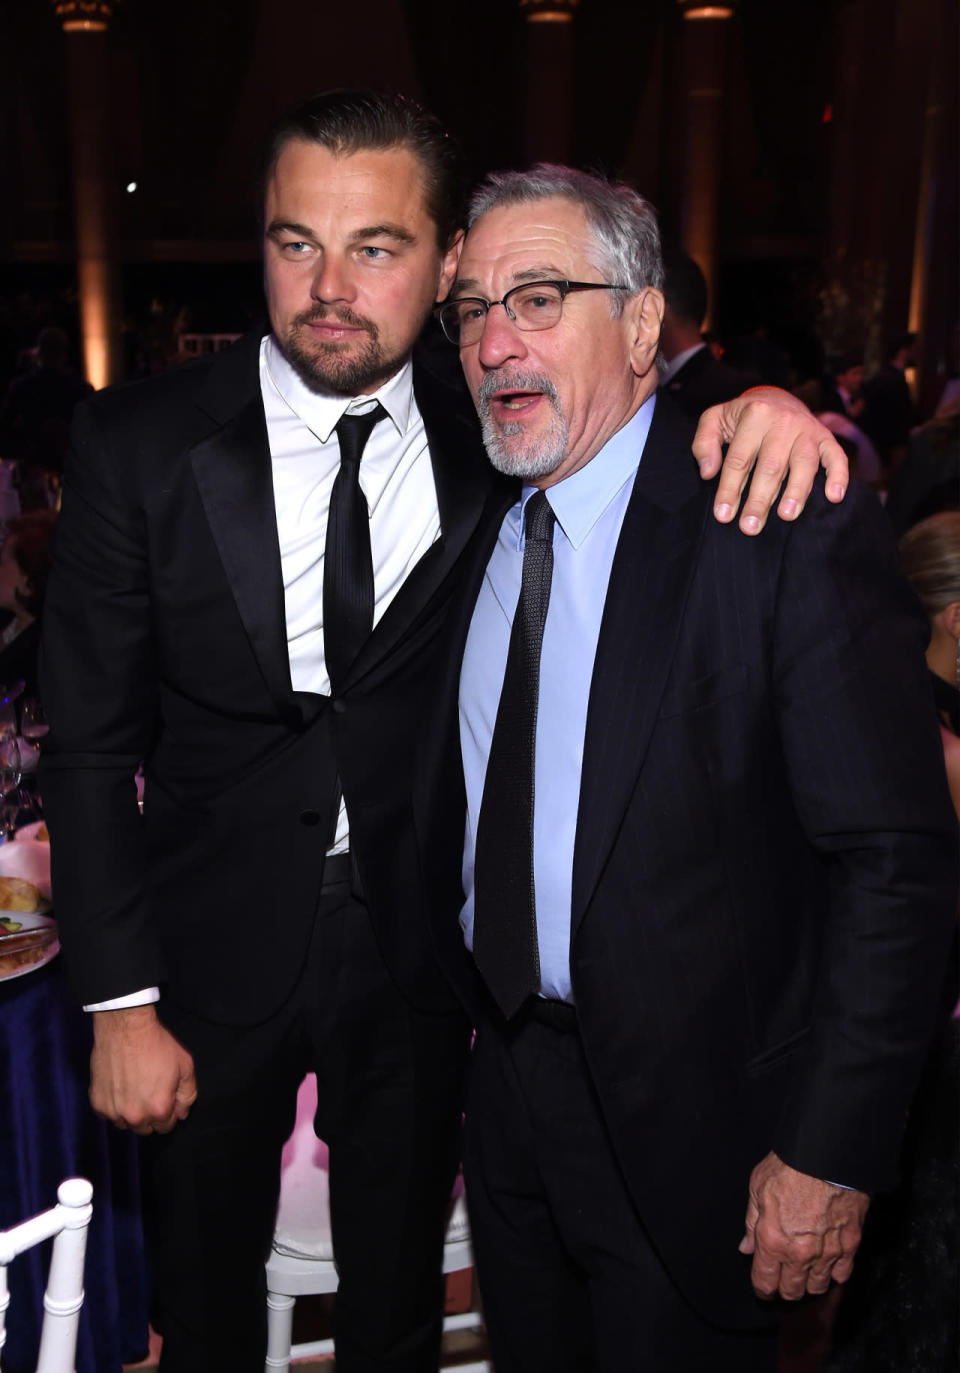 Leonardo DiCaprio and Robert De Niro attend the 2016 amfAR New York Gala at Cipriani Wall Street on February 10, 2016 in New York City. 